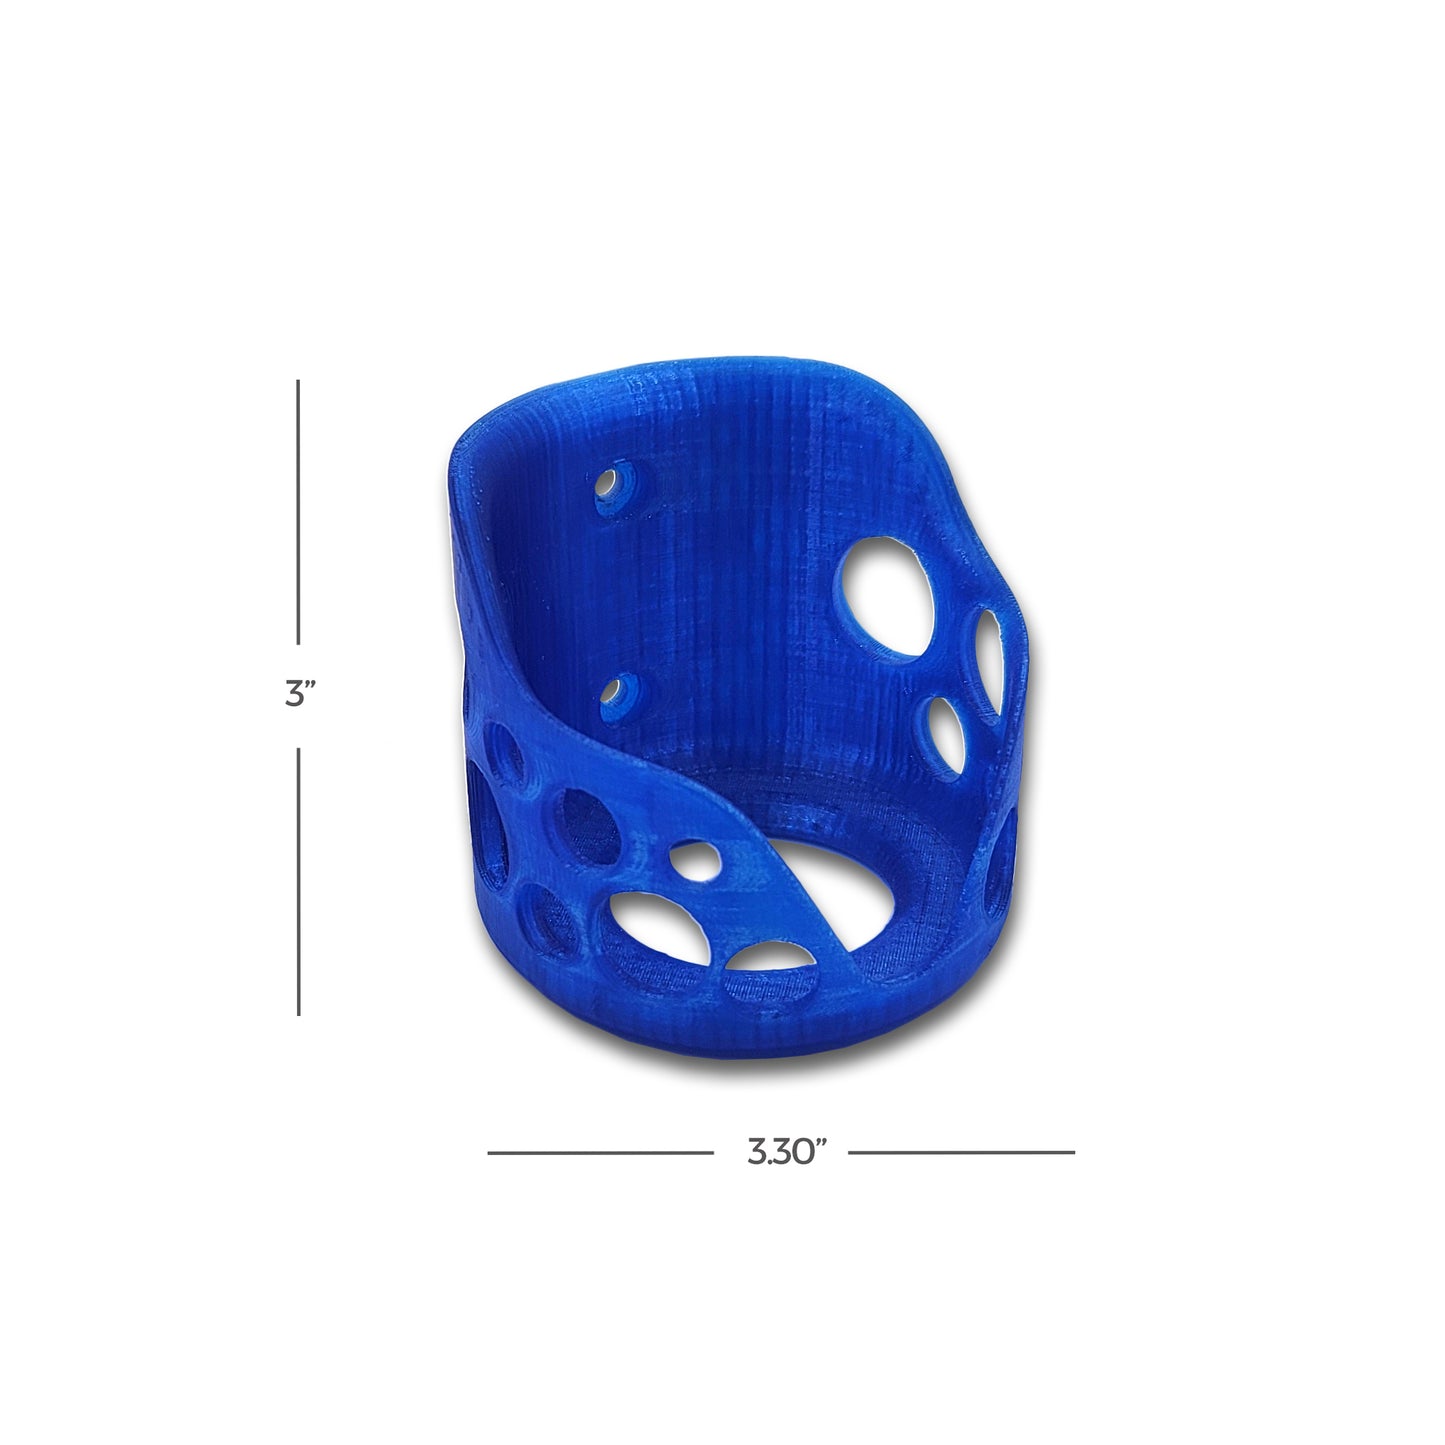 SPEAKER POCKET - Bluetooth Speaker (Boom 3) | Wall Mount (3D PRINTED)